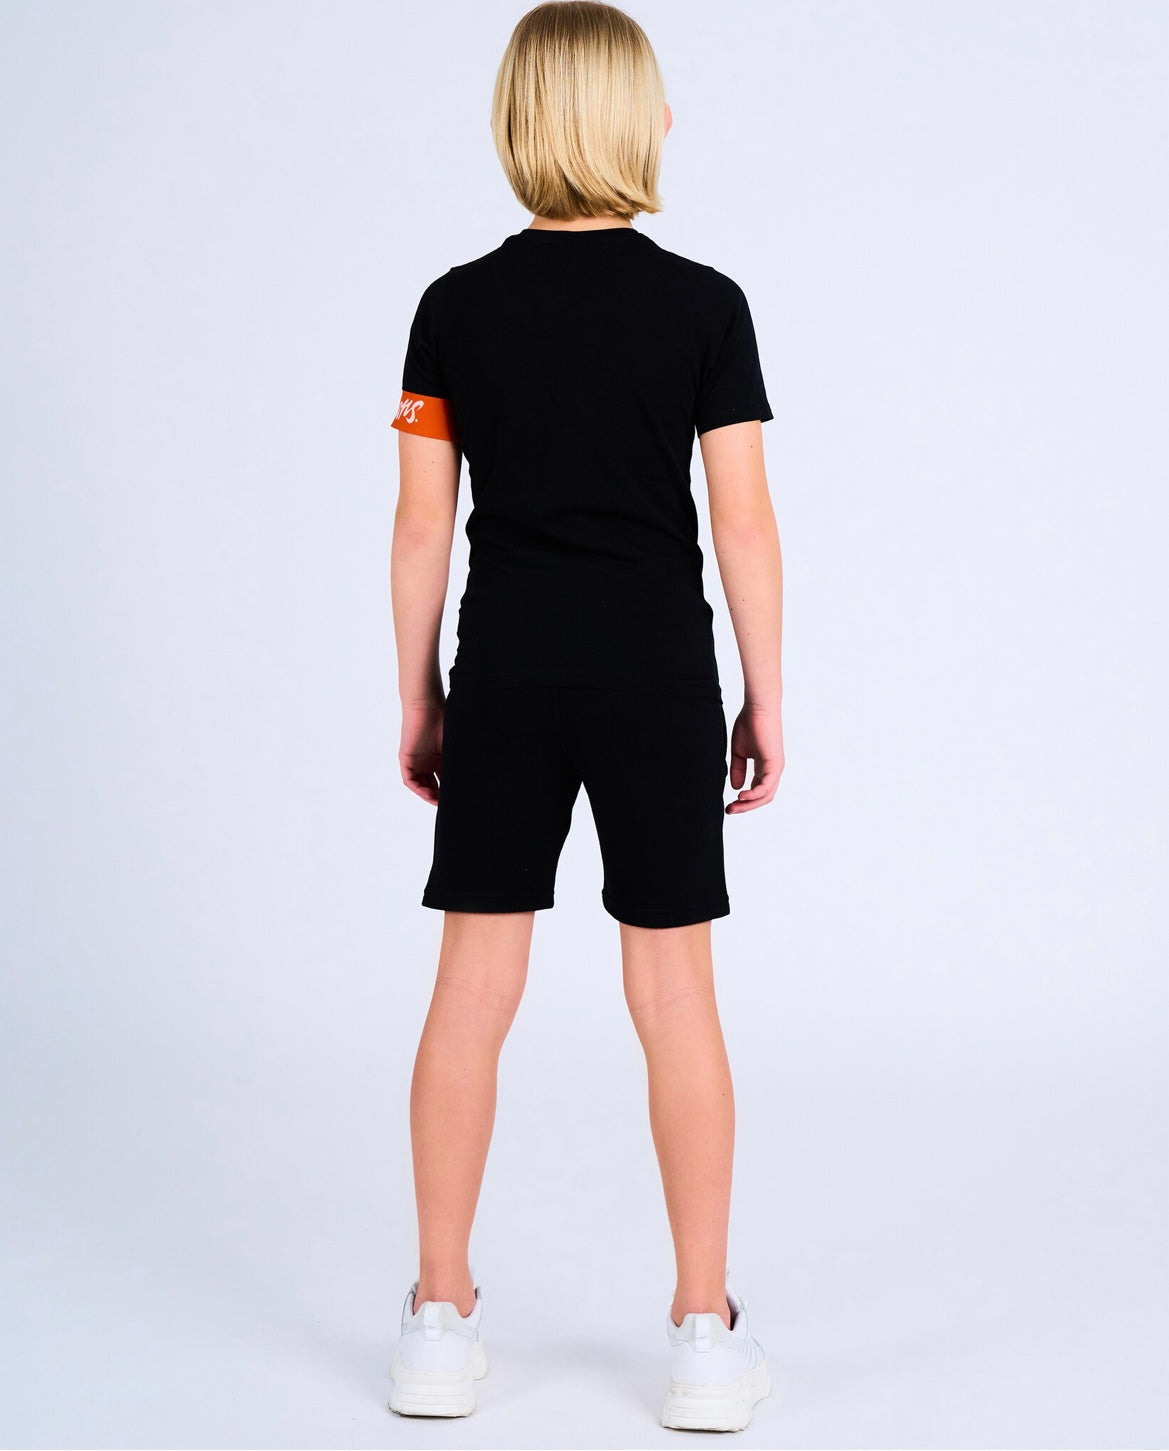 Malelions junior captain t-shirt 2.0 - black/orange